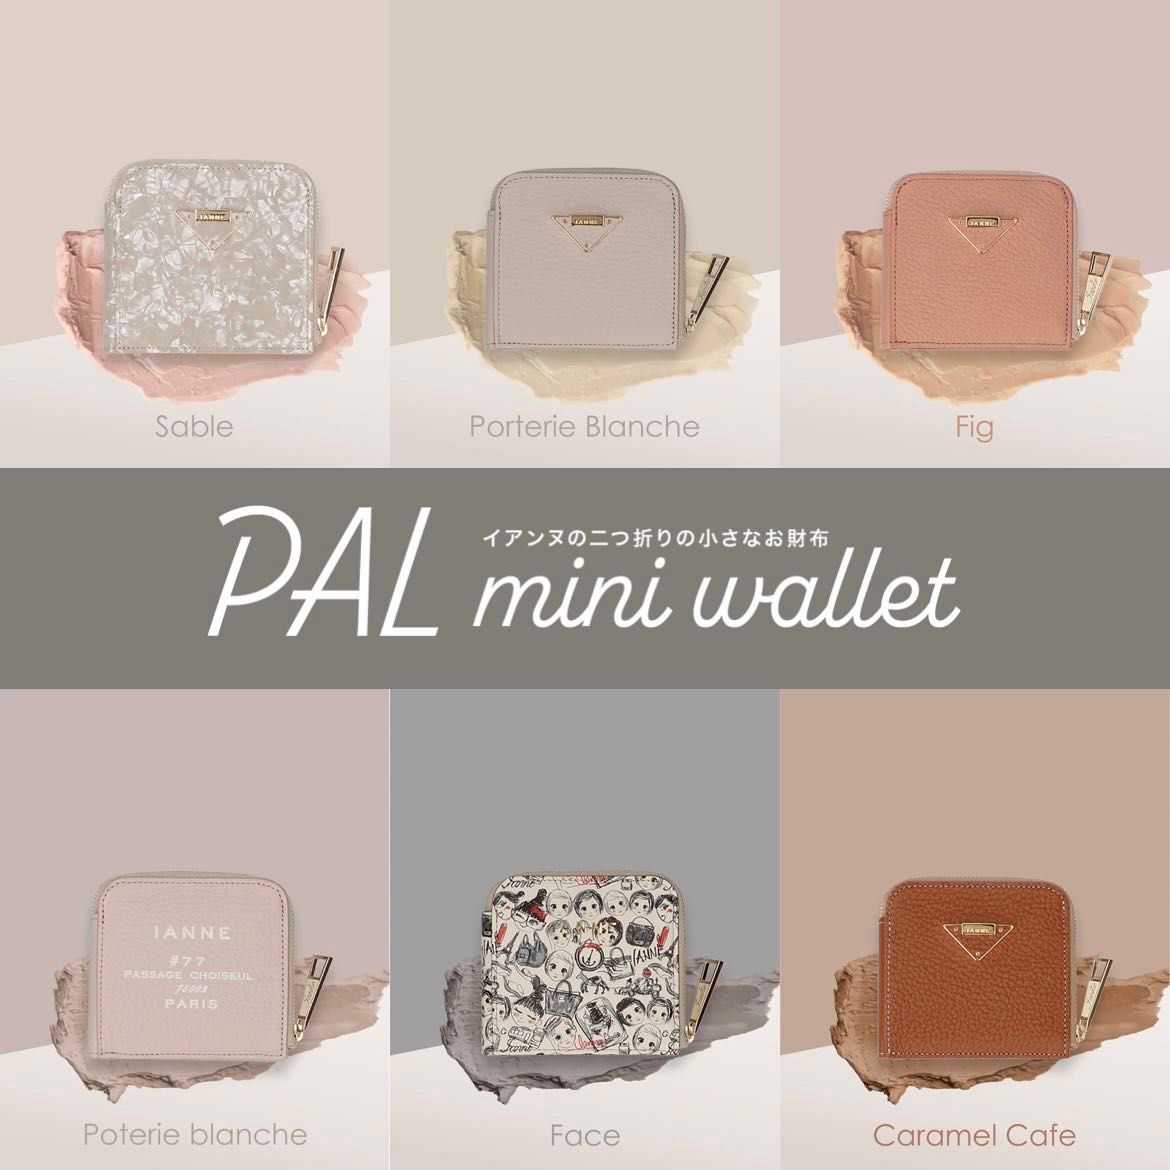 IANNE史上、最もコンパクトな二つ折り財布「PAL」 – ATAO LAND+(アタ ...